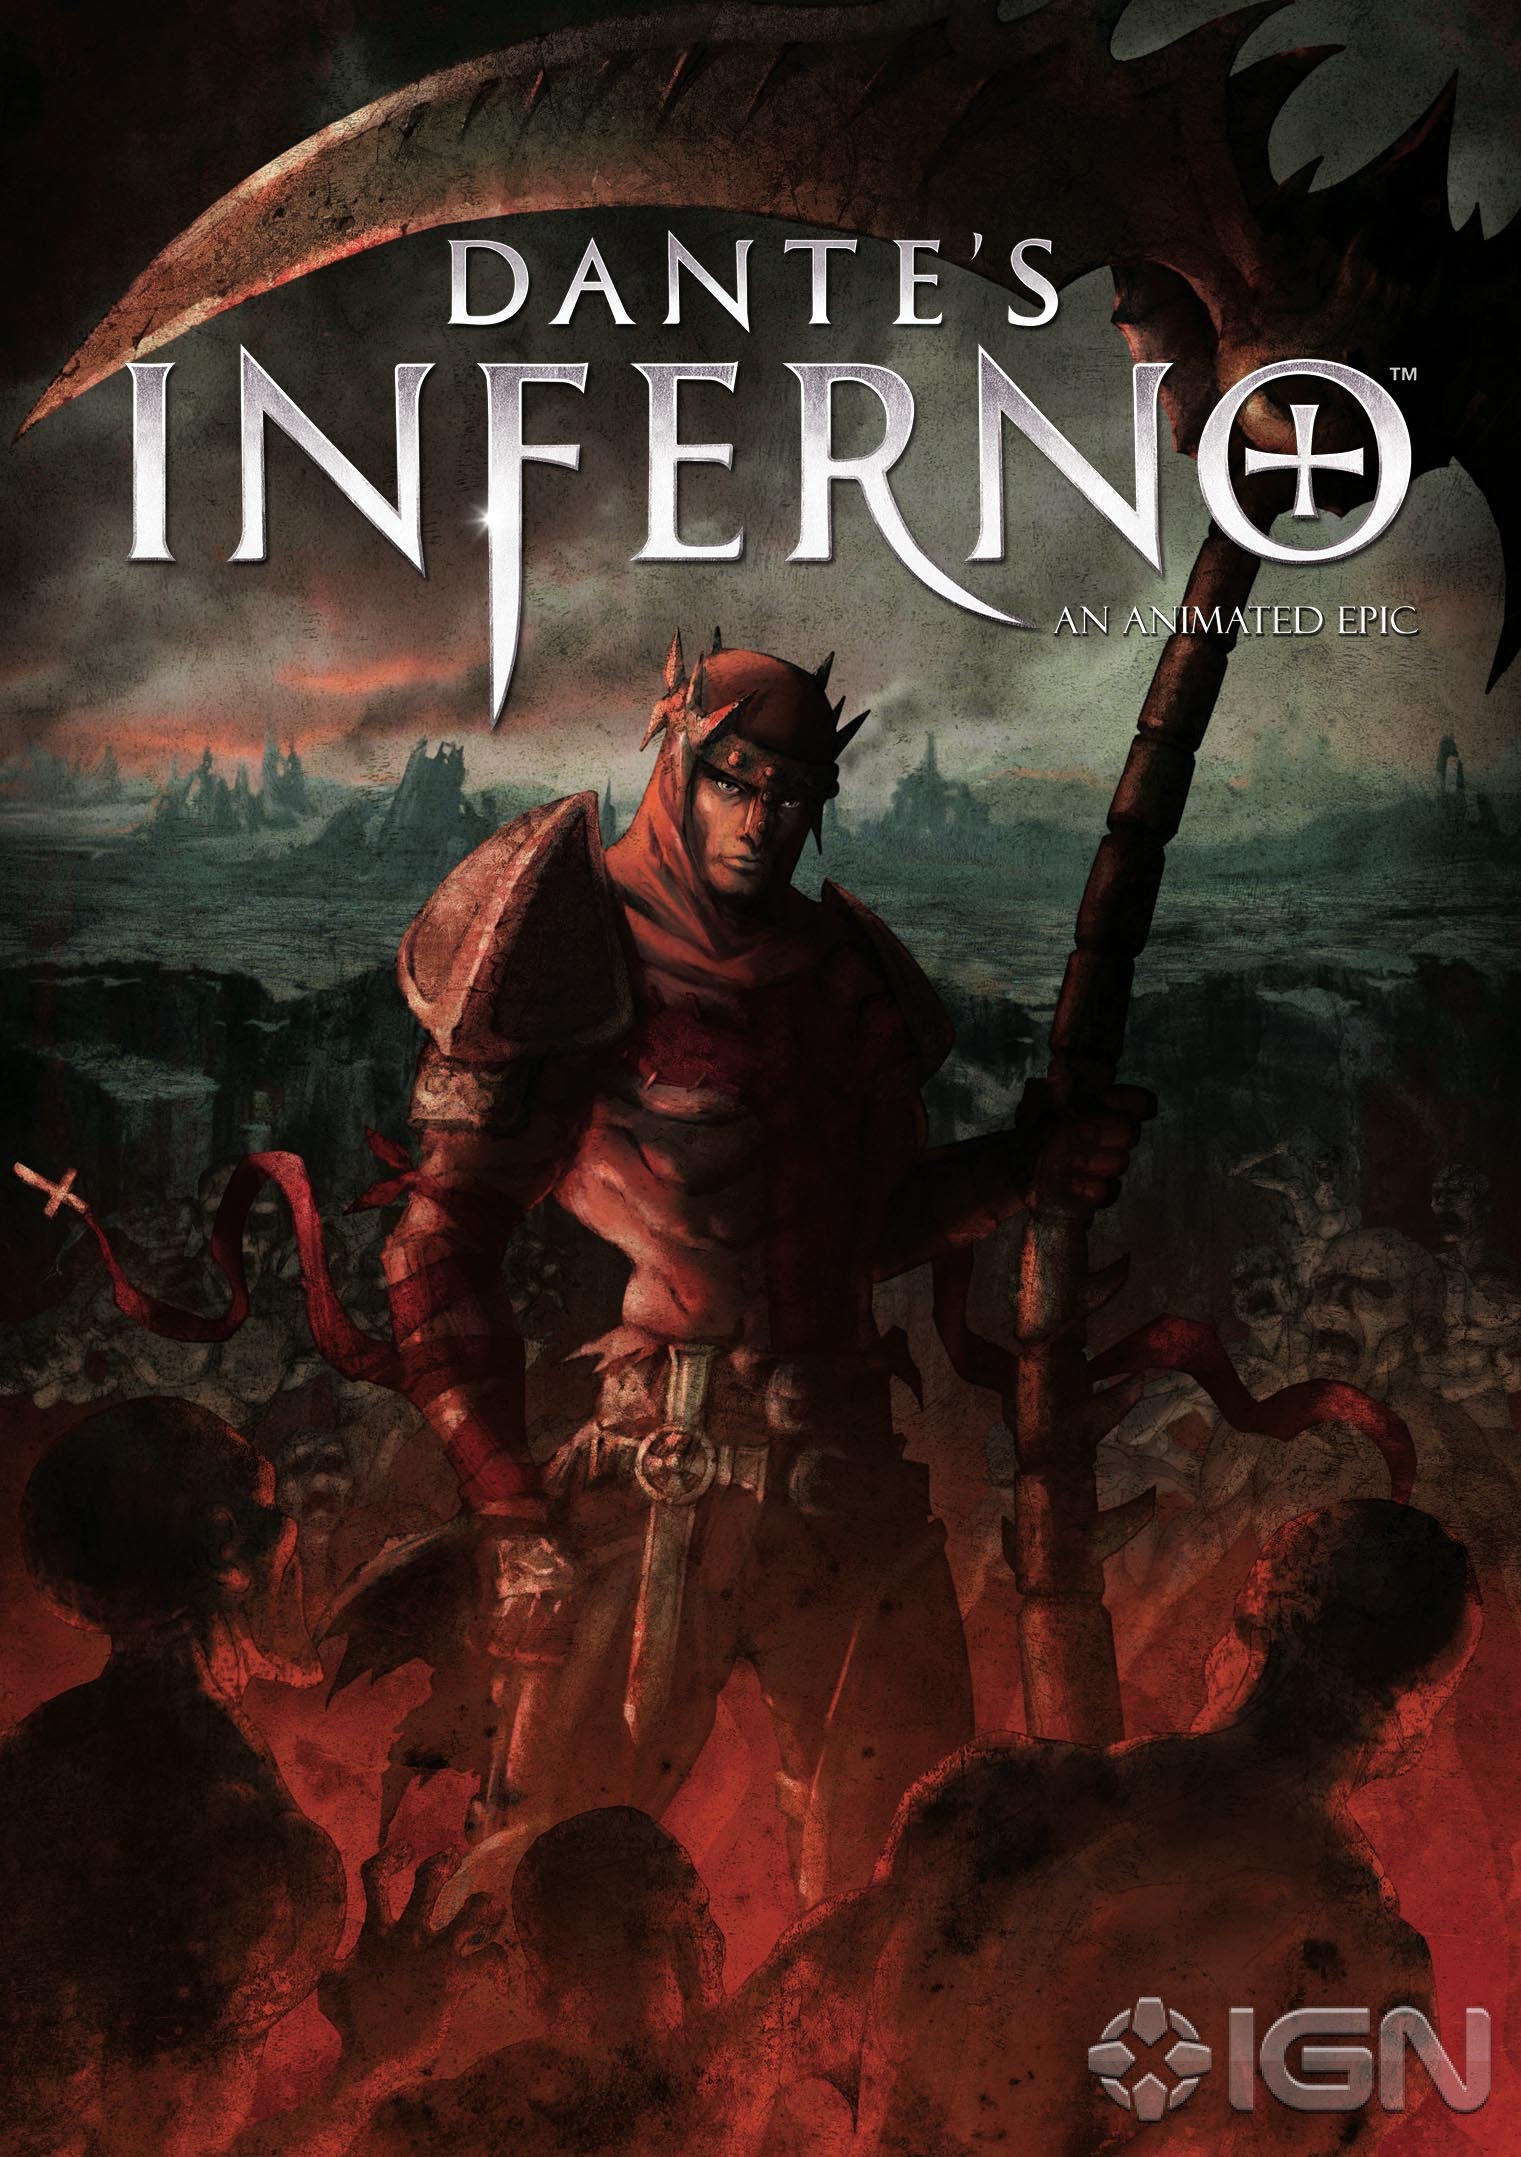 Movie Inferno Watch Online Full-Length